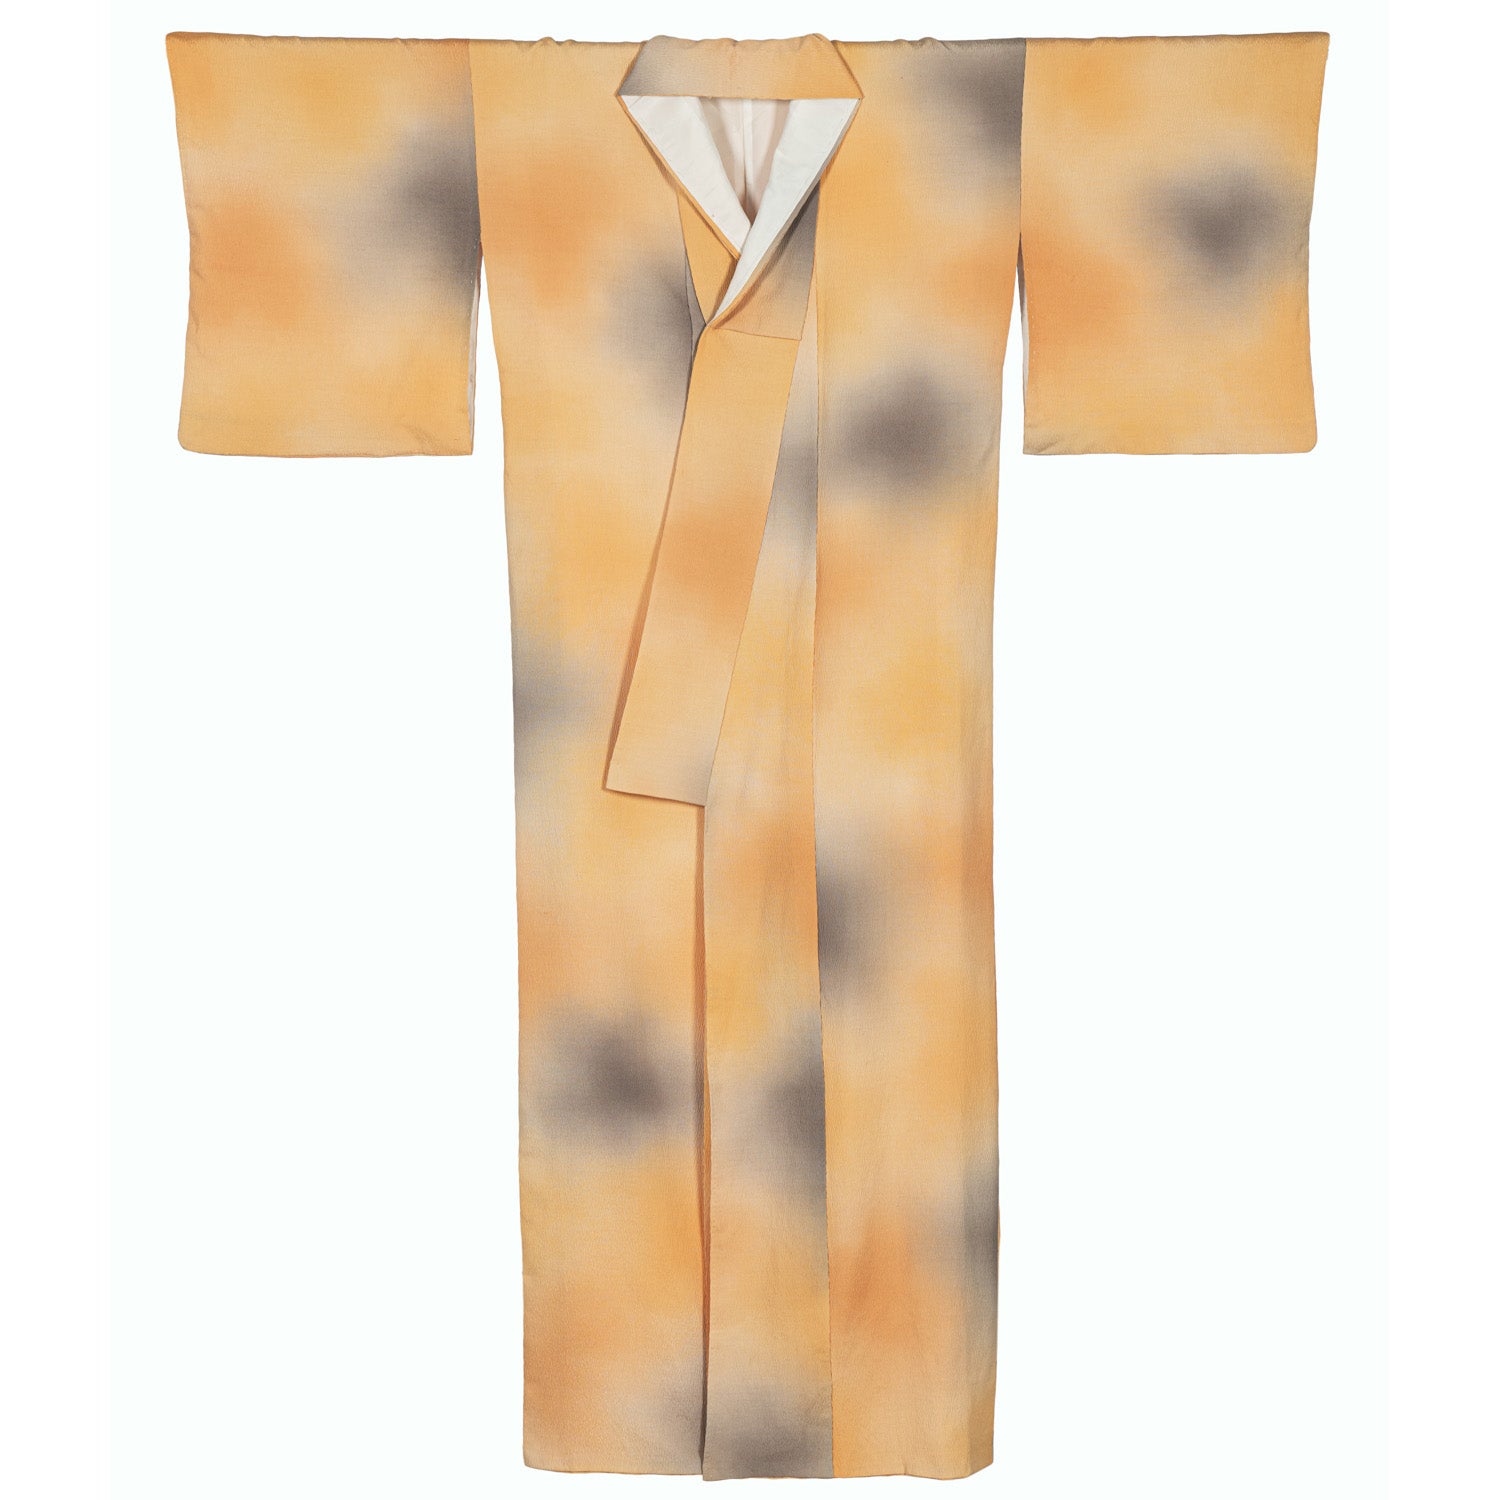 Iwanuiro Vintage Japanese Kimono Robe